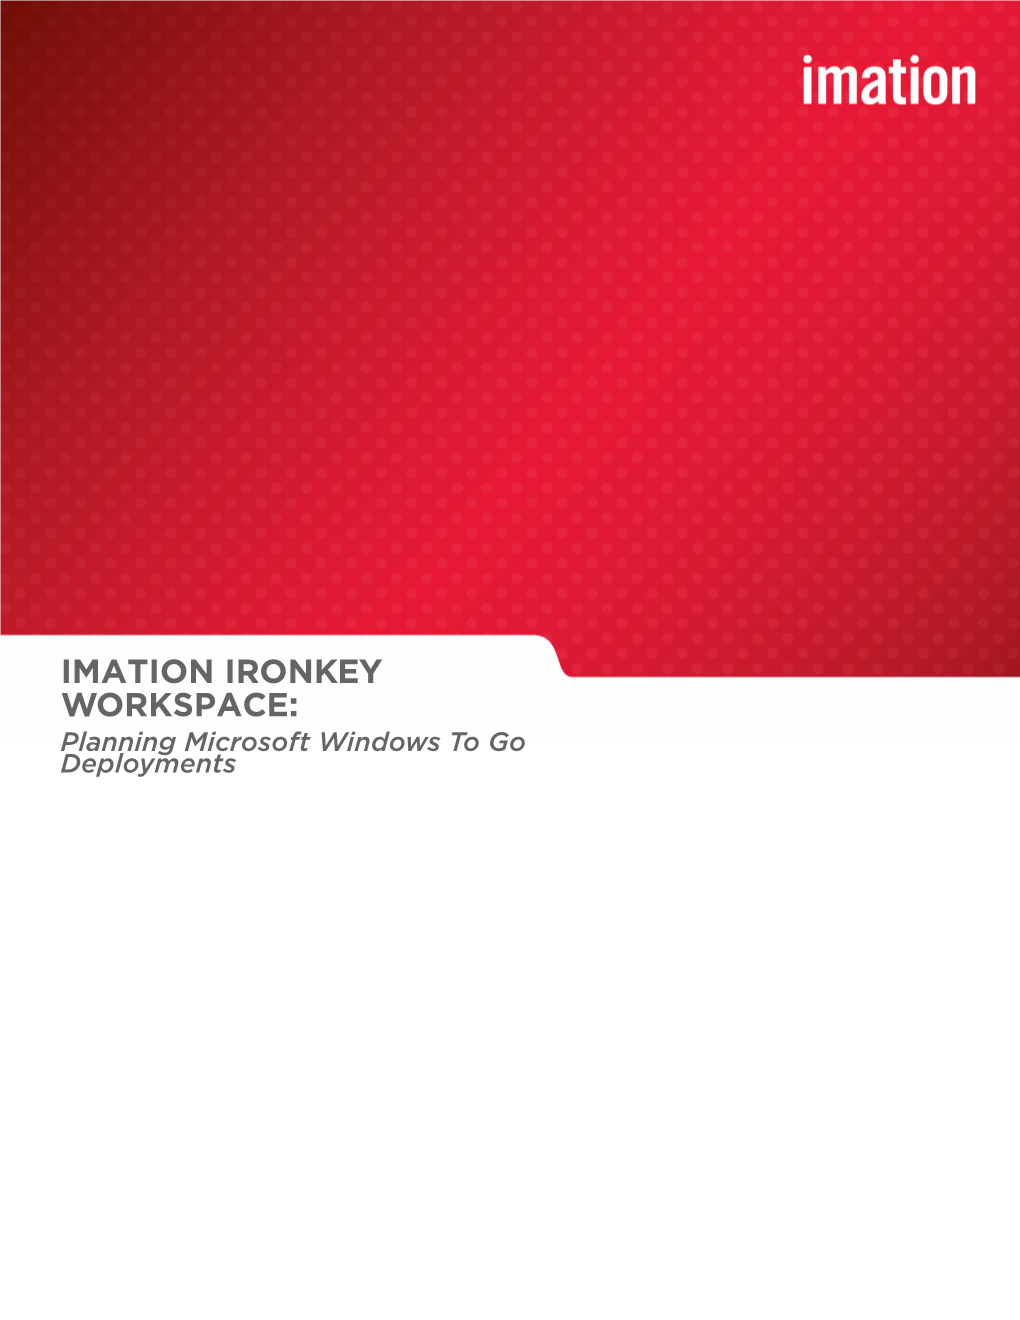 IMATION IRONKEY WORKSPACE: Planning Microsoft Windows to Go Deployments Copyright 2012 Imation Corp